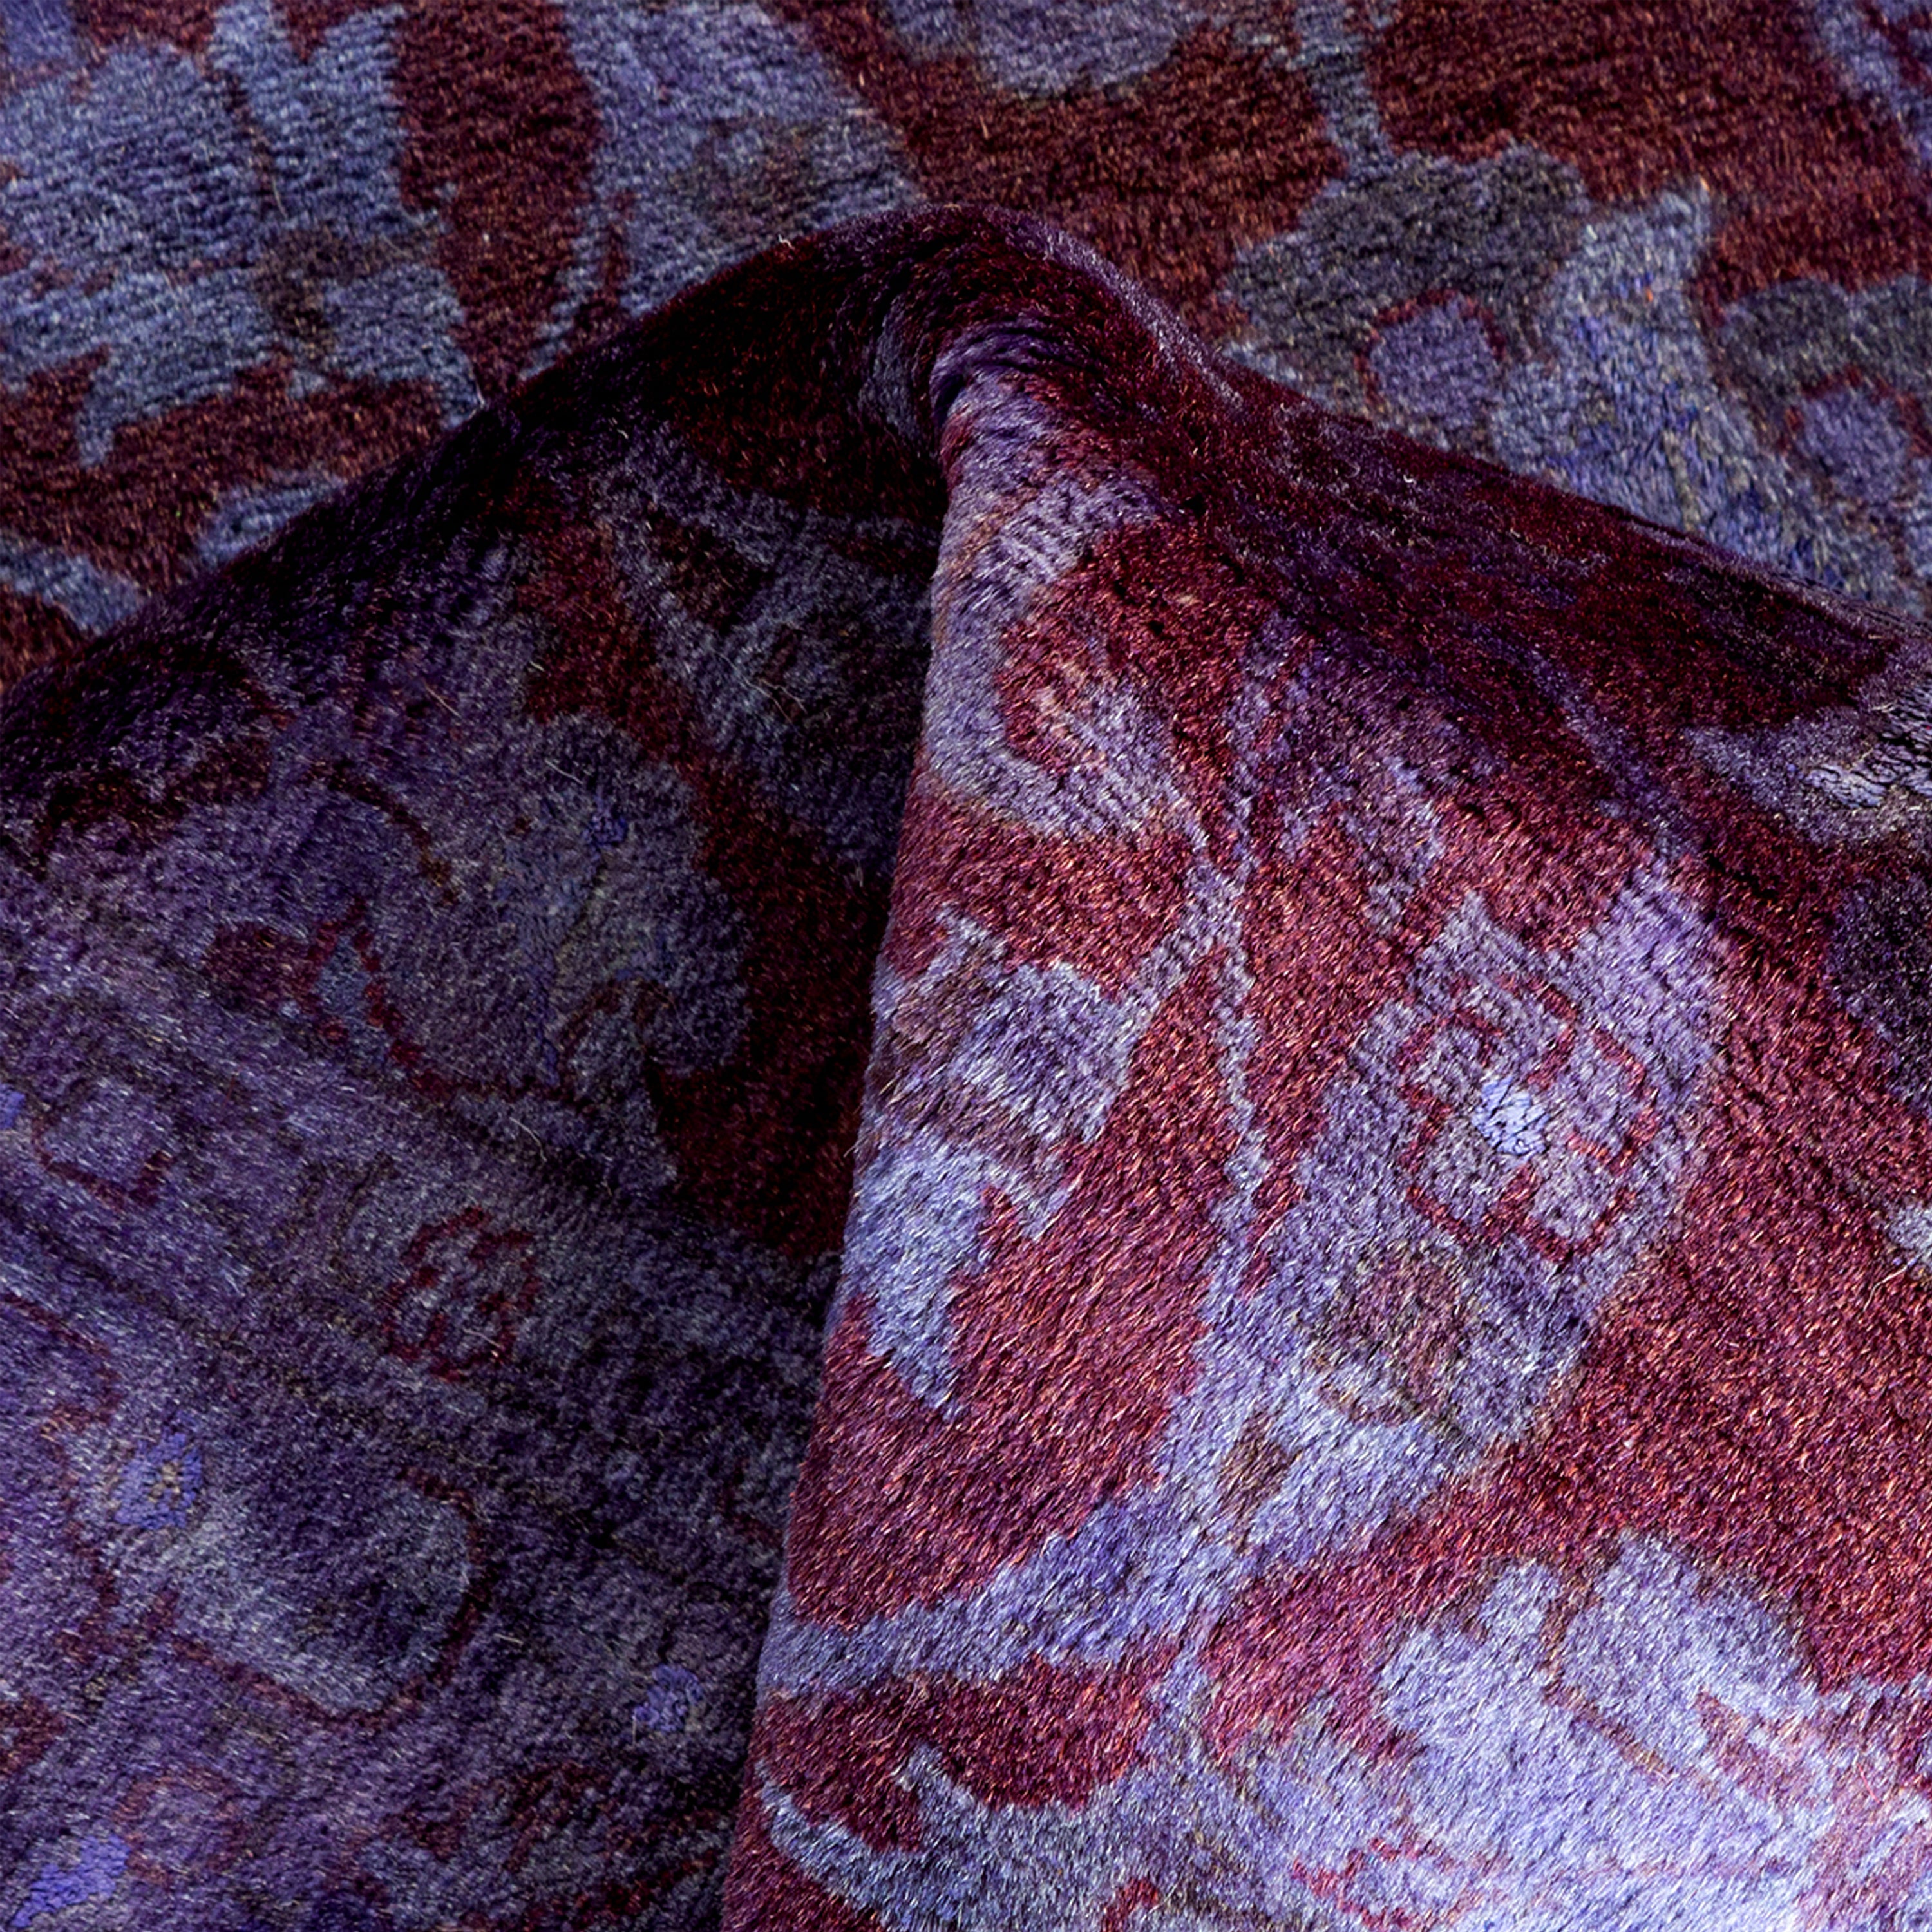 Purple Overdyed Wool Runner - 2' 7" x 10' 8"